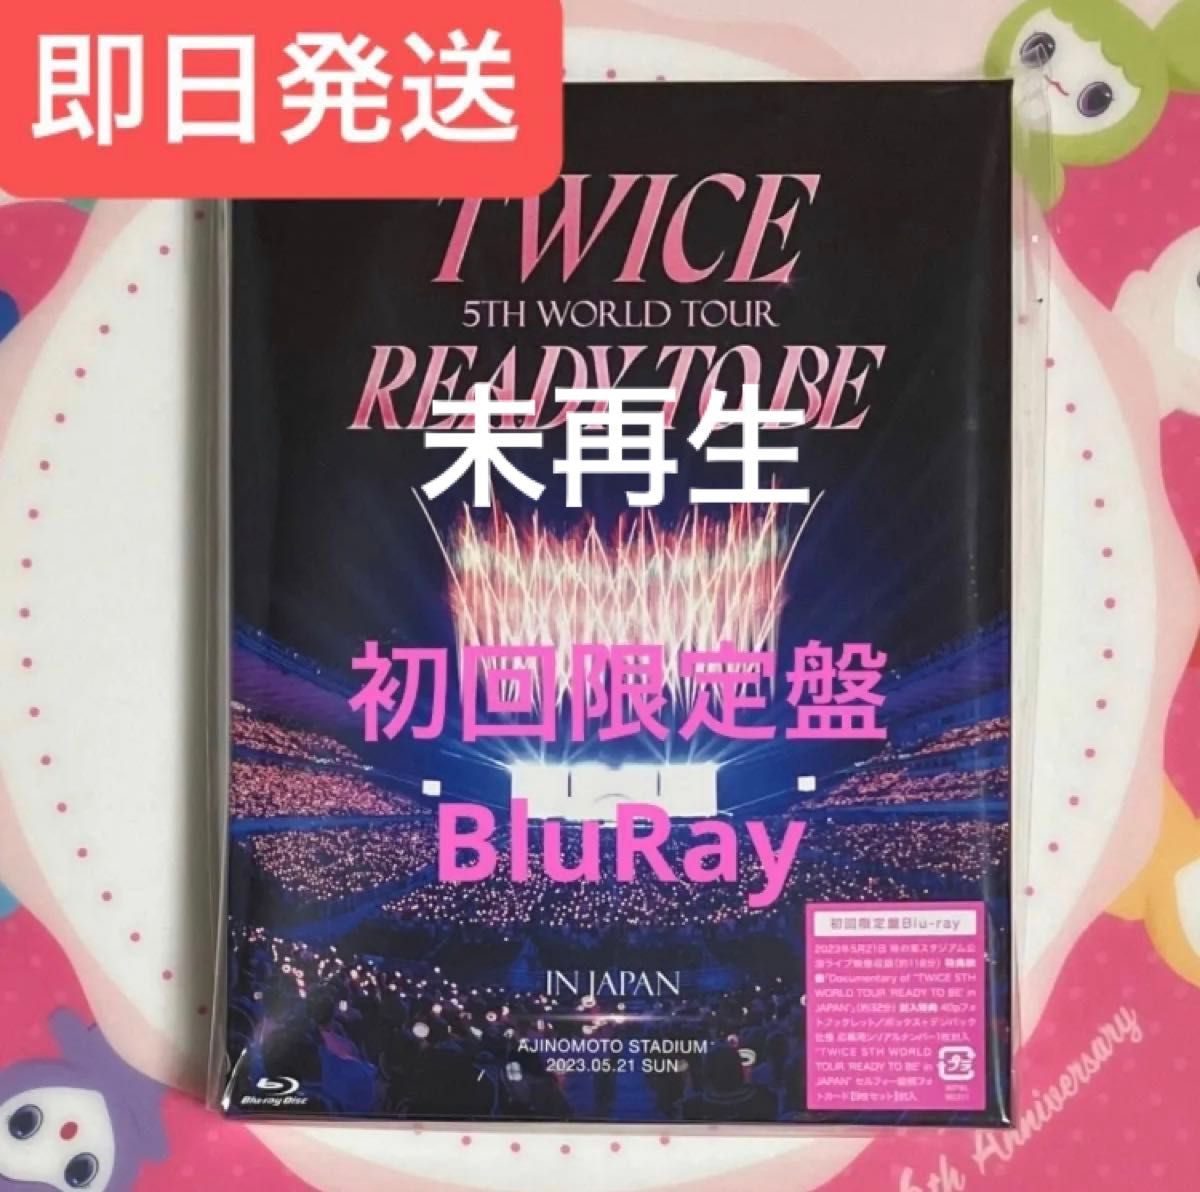 TWICE 5TH WORLD TOUR READY TO BE 初回限定盤  BluRay 未再生